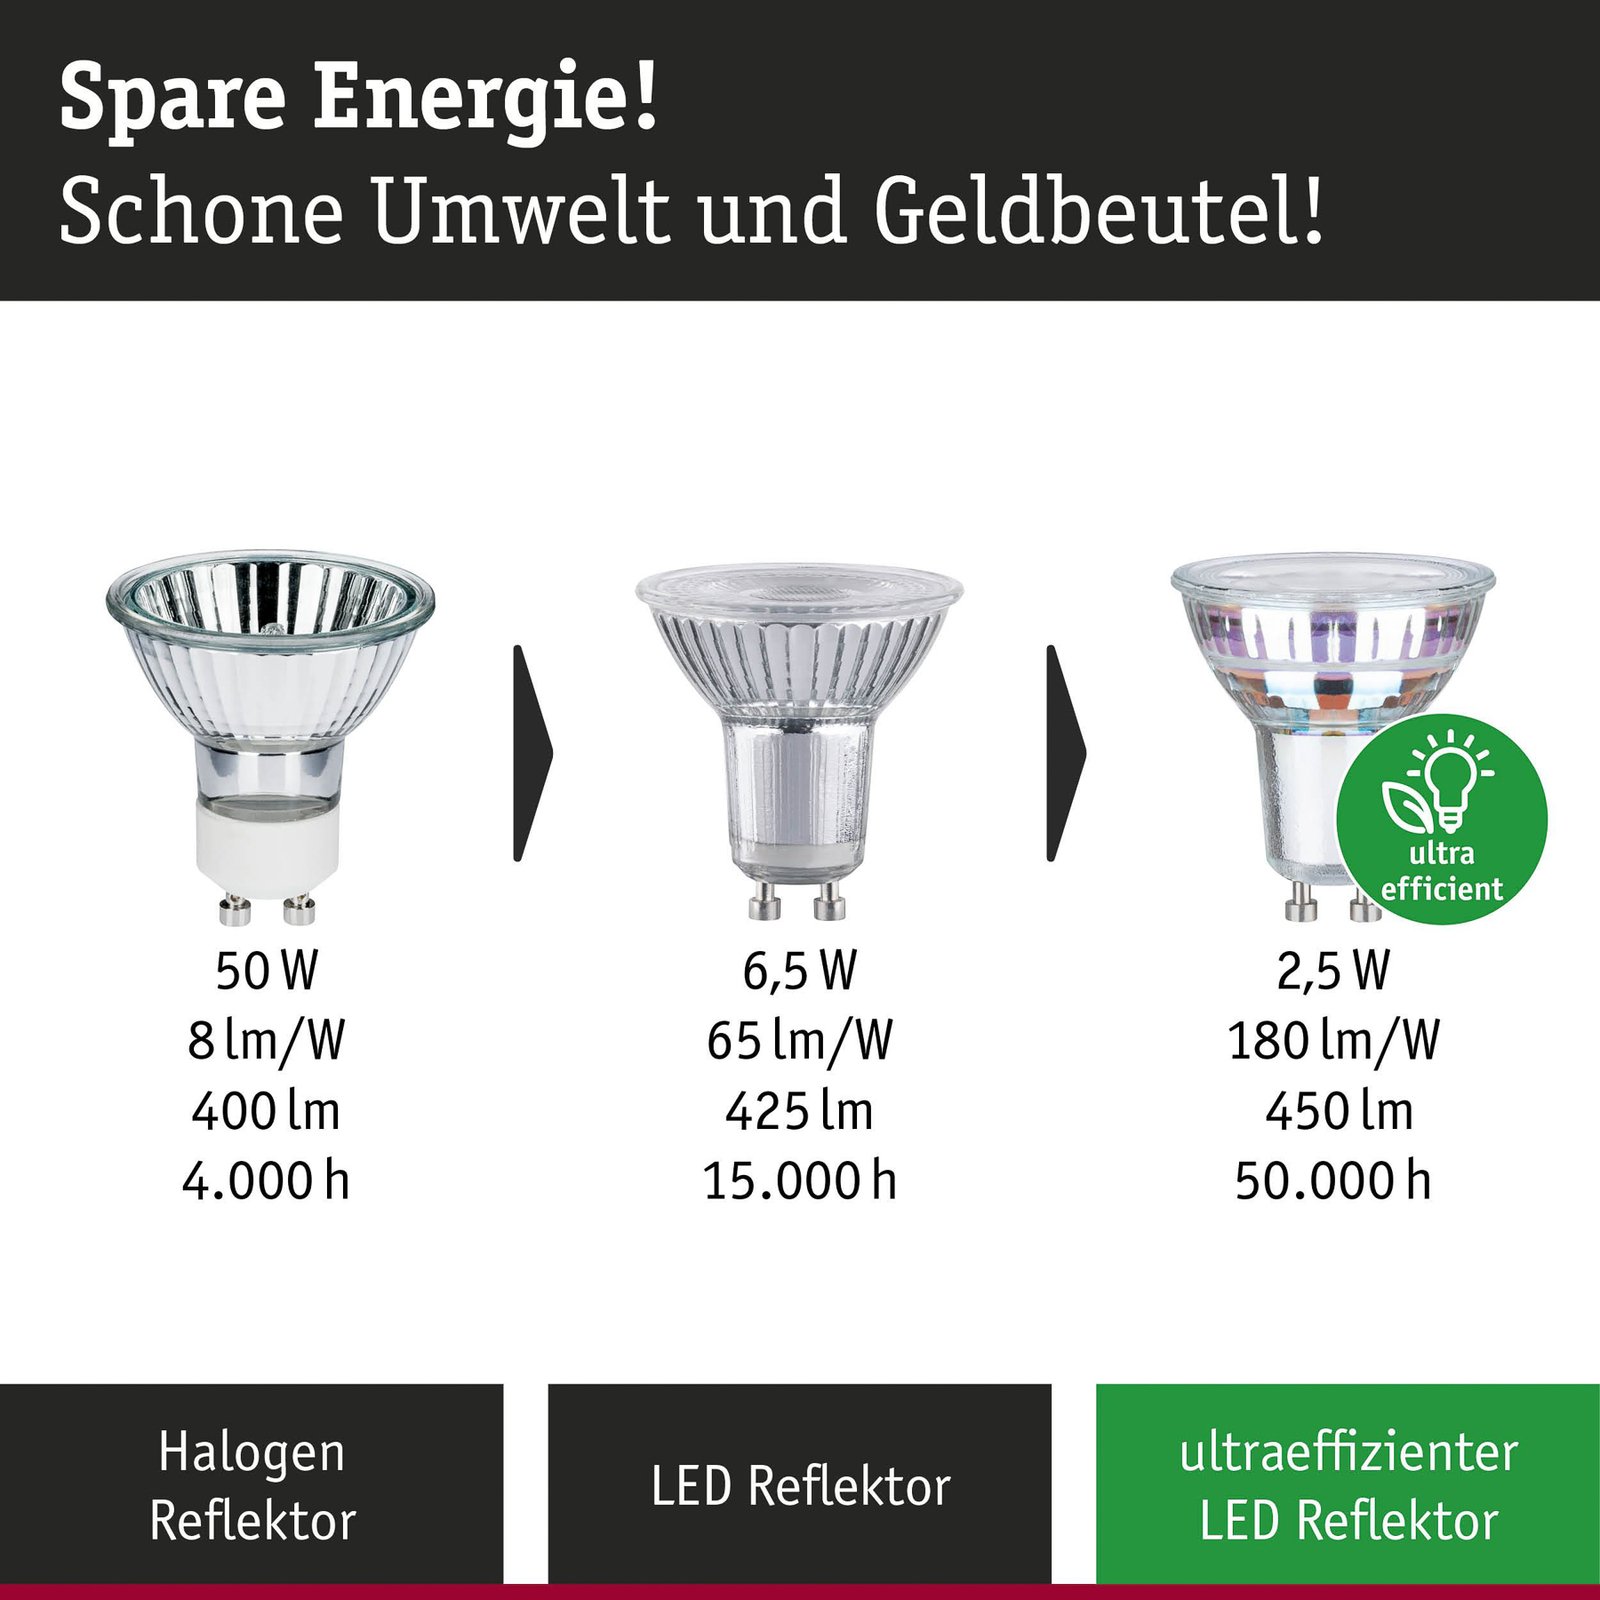 Paulmann GU10 LED bulb 2.5 W, 3,000 K, 450 lm, 100° 3 units